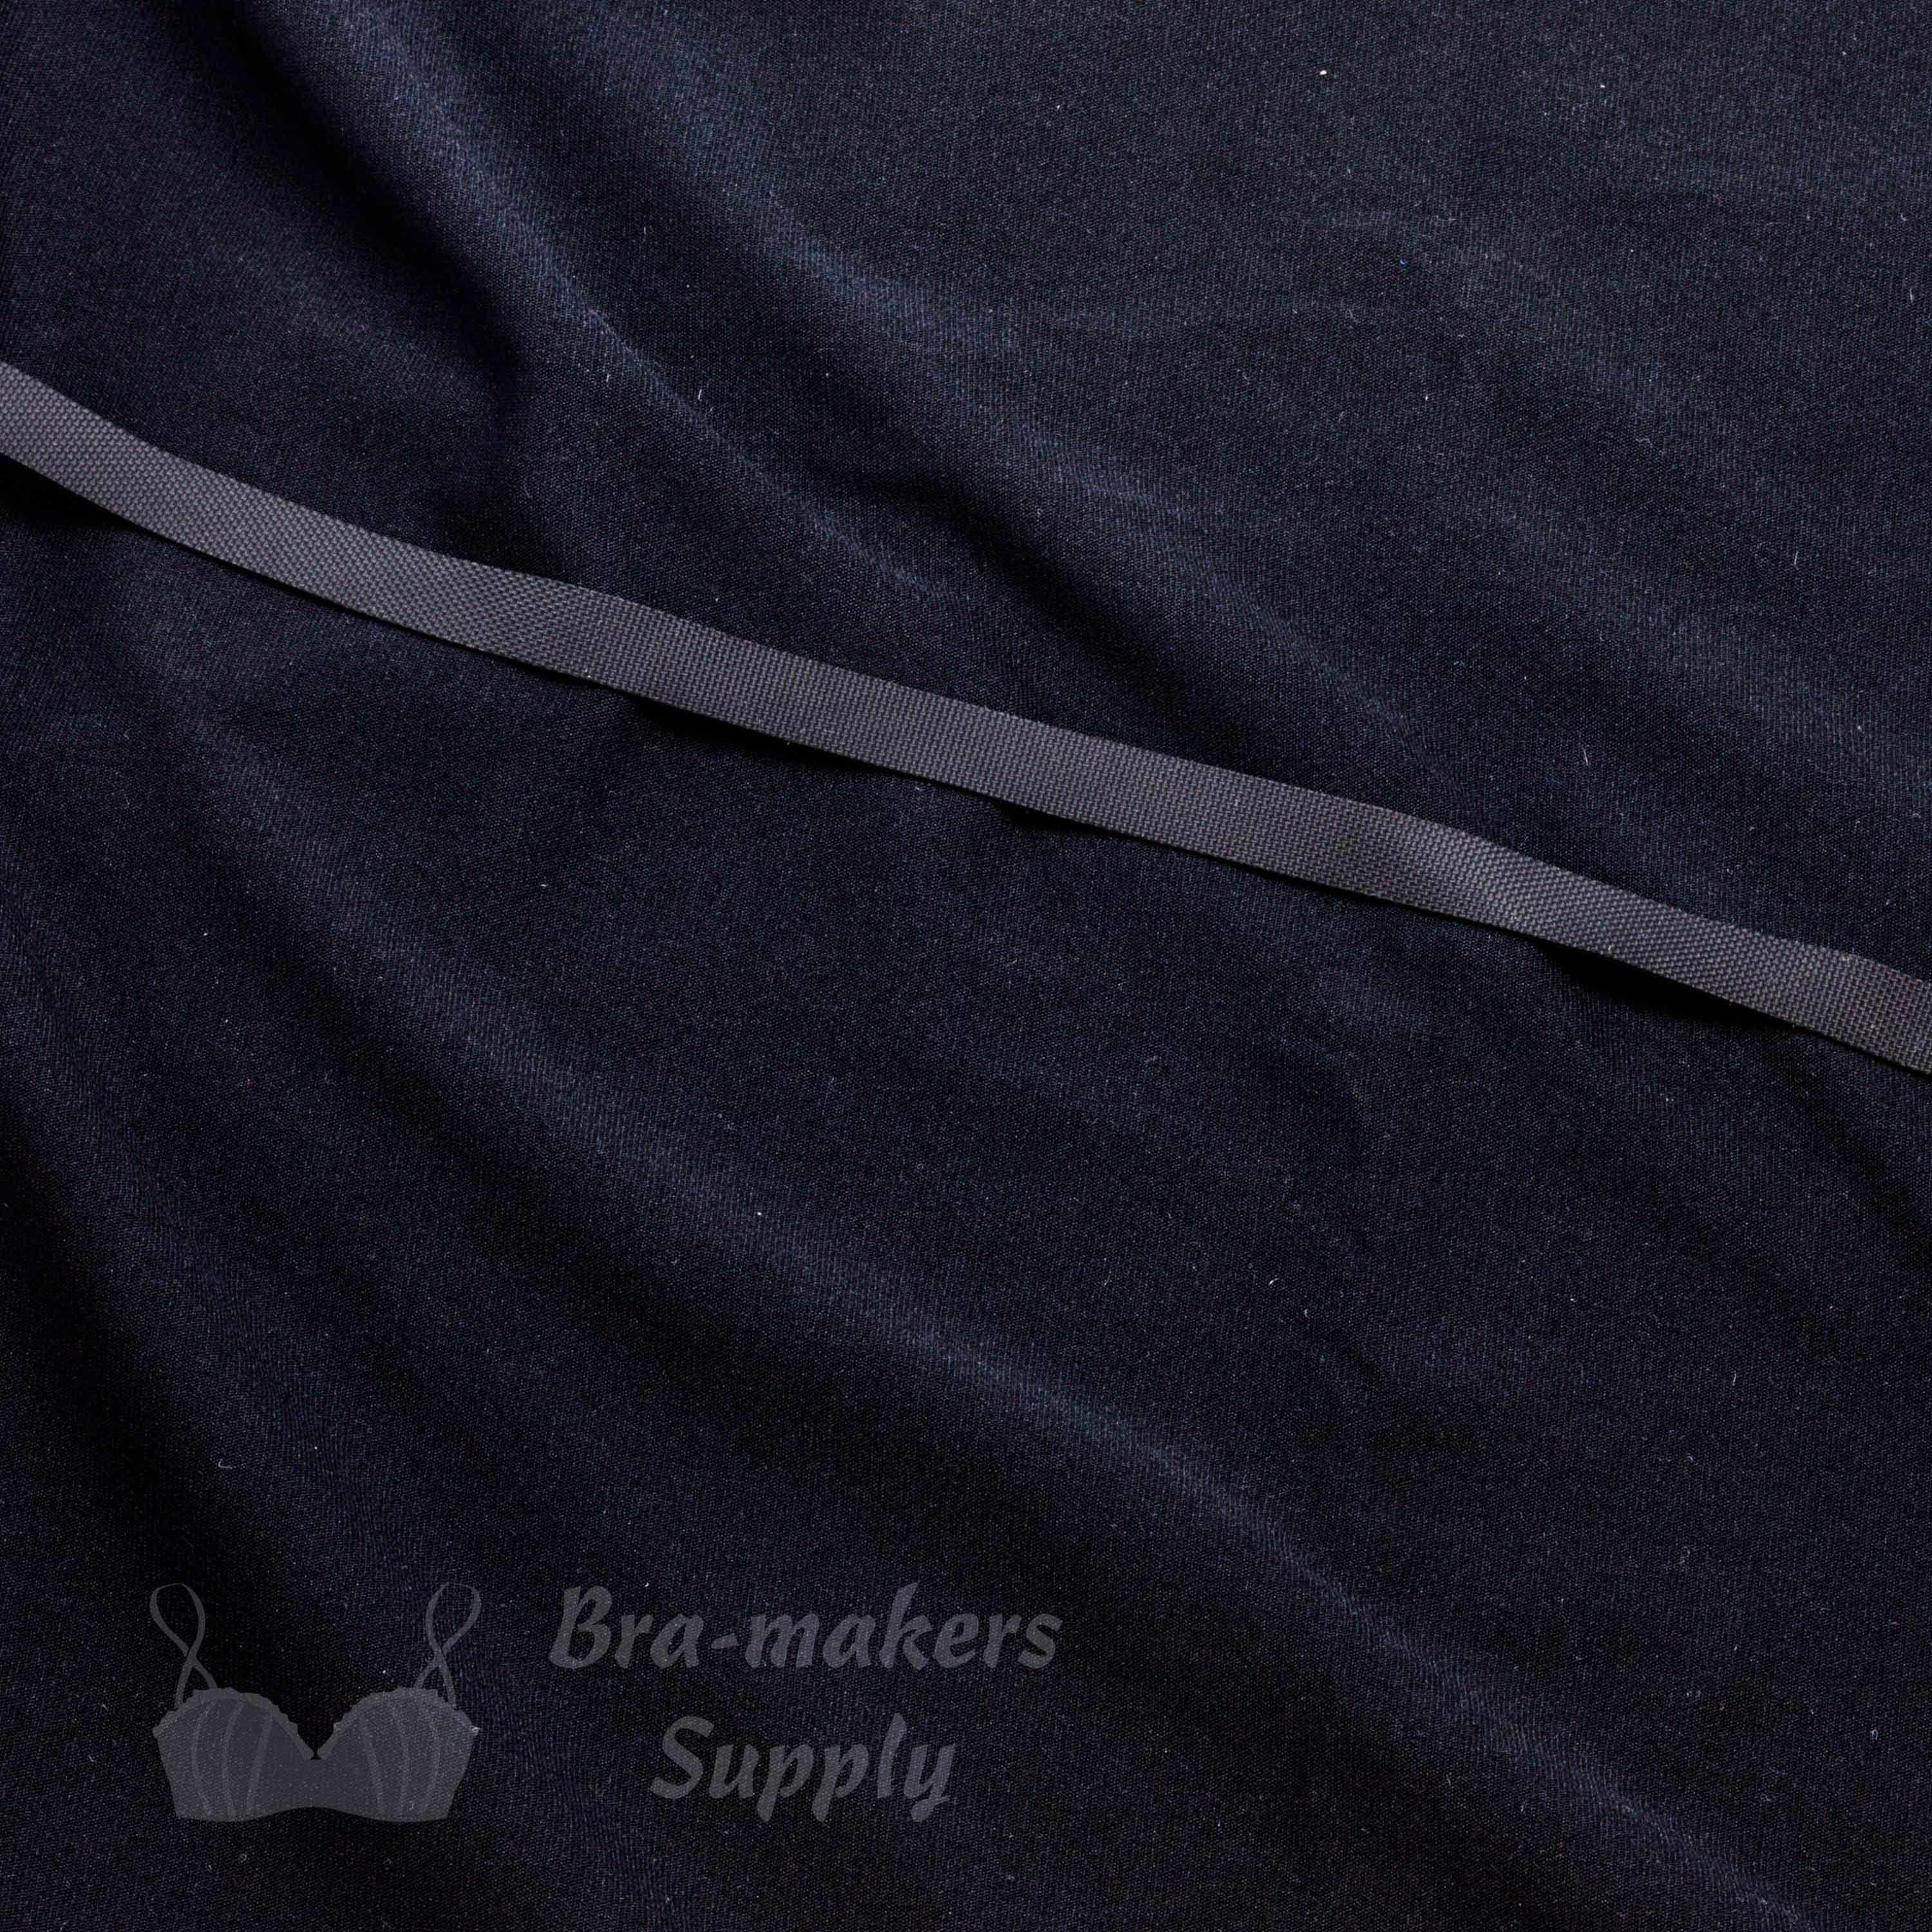 swimwear kits - bare bones KB-033 black from Bra-Makers Supply